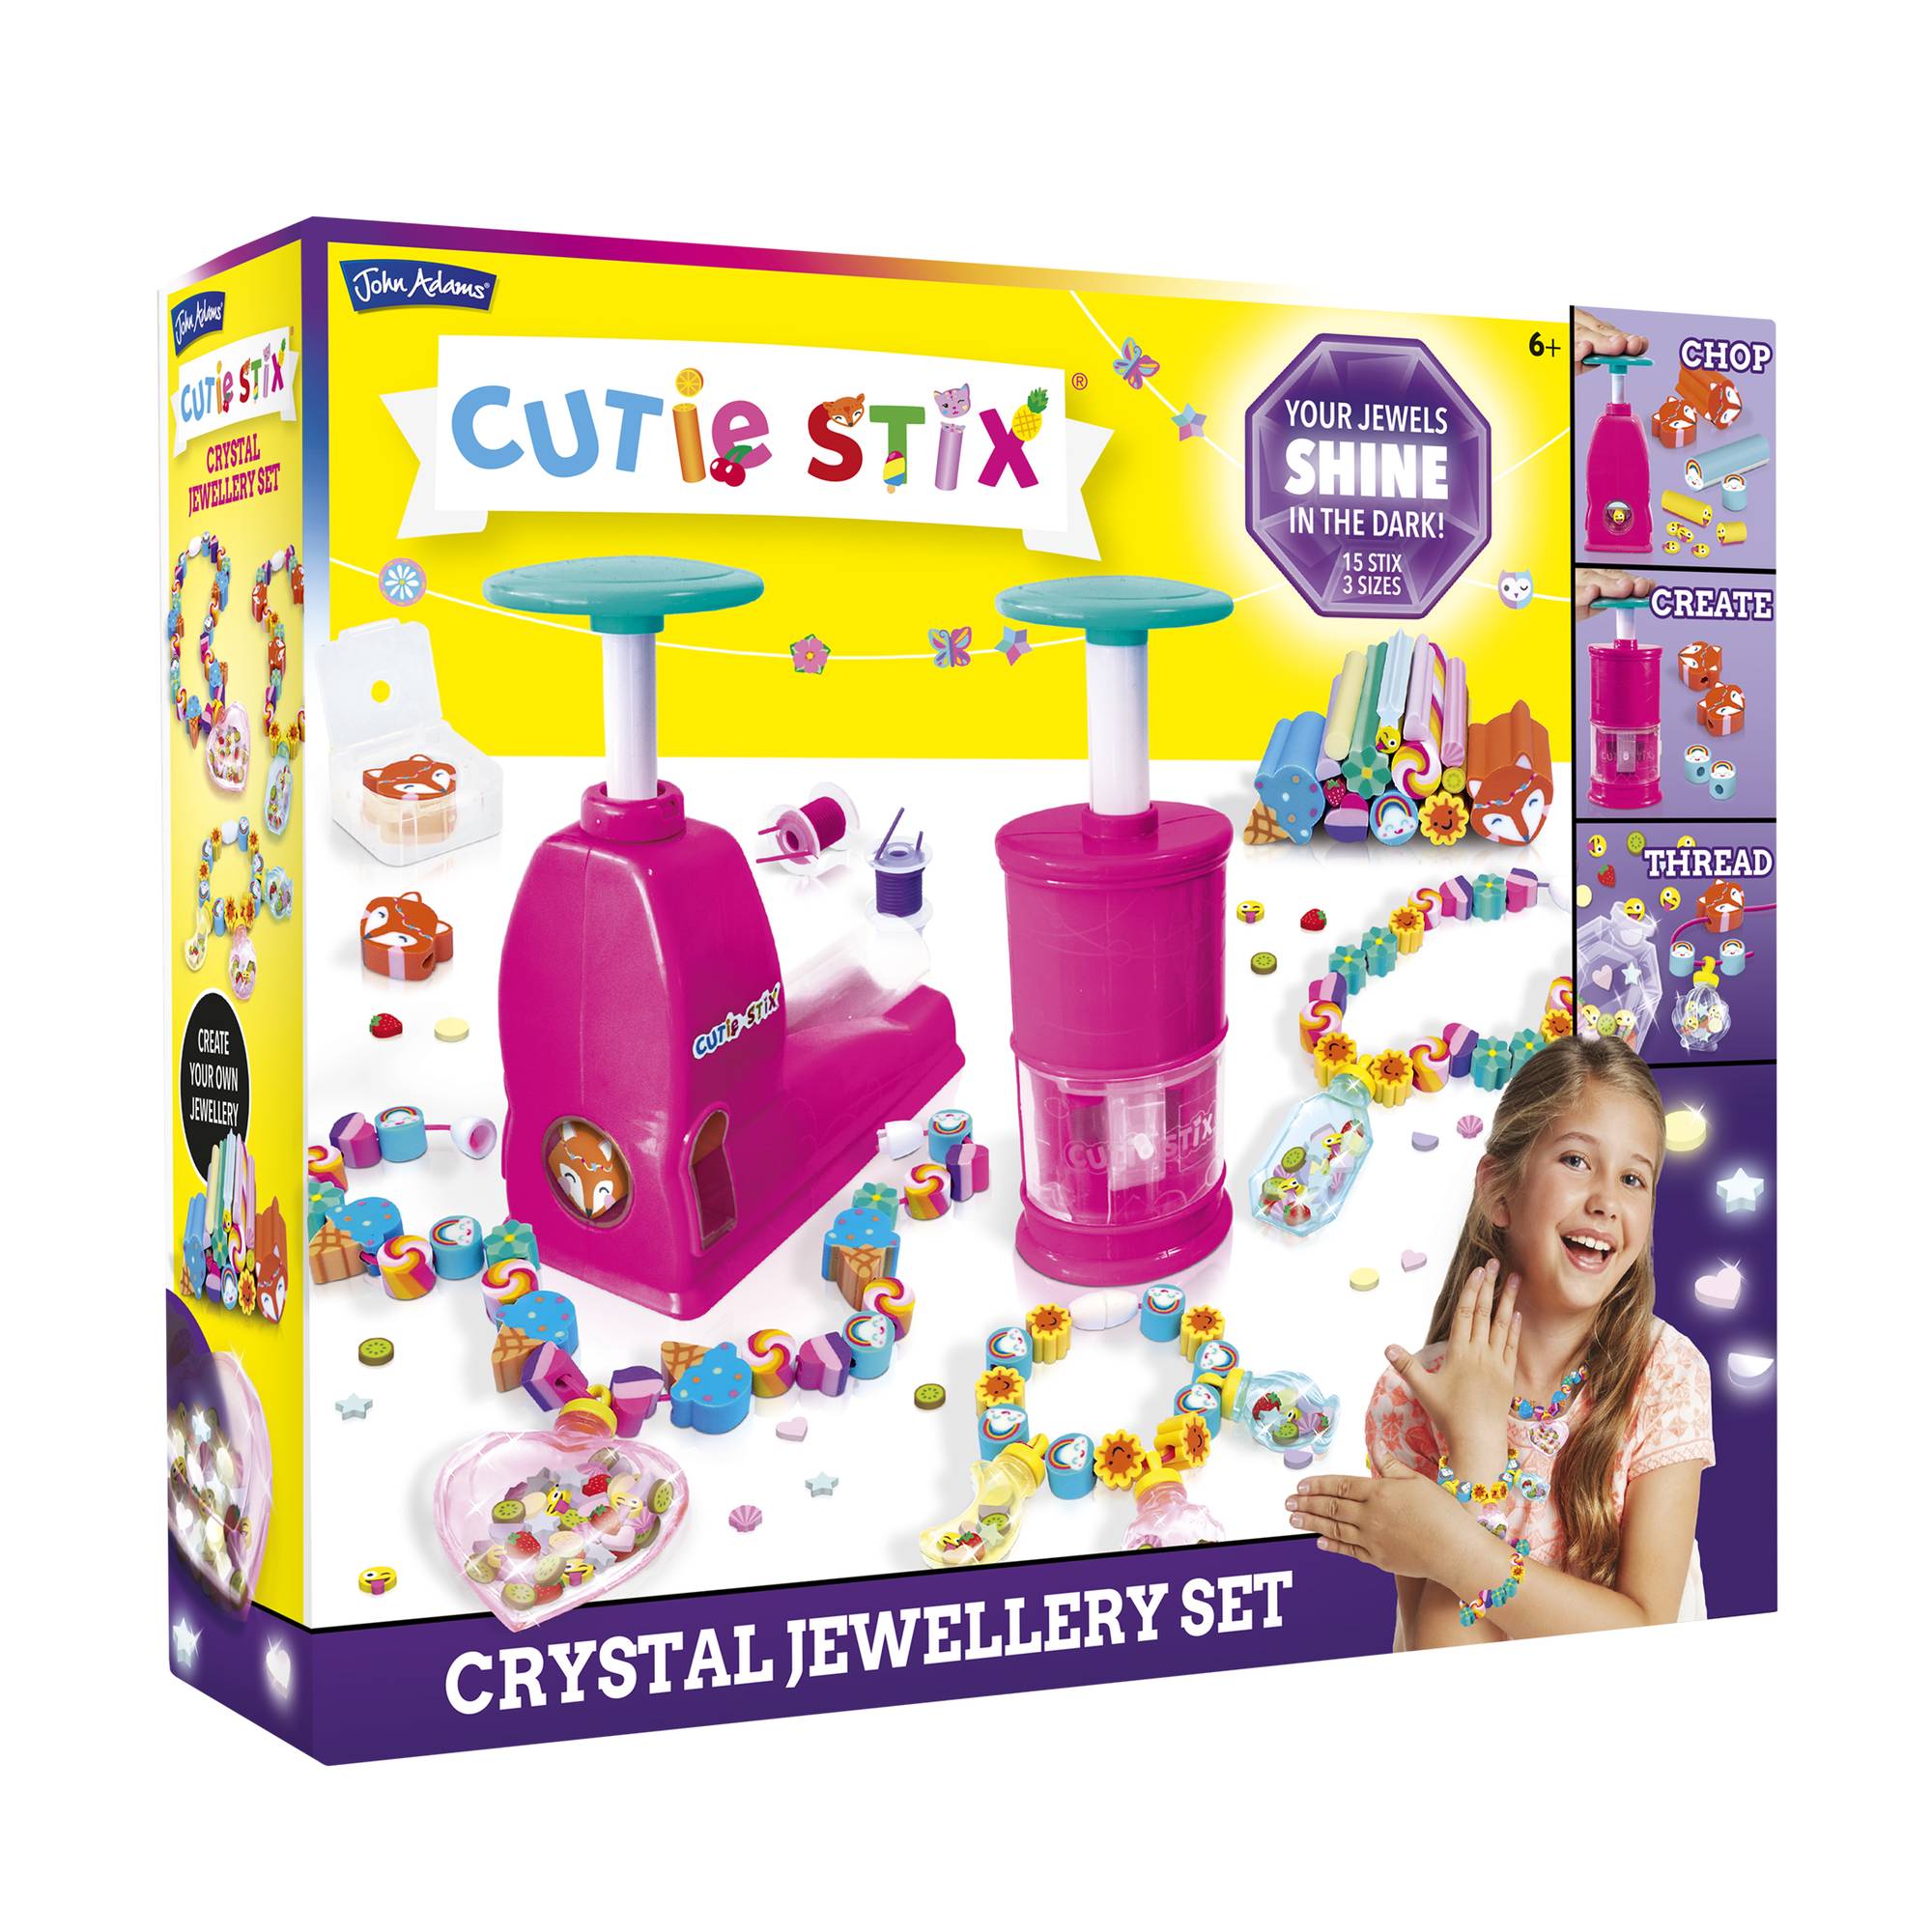 Cutie Stix Crafts Toy Unboxing, Making Crafts, Jewelry